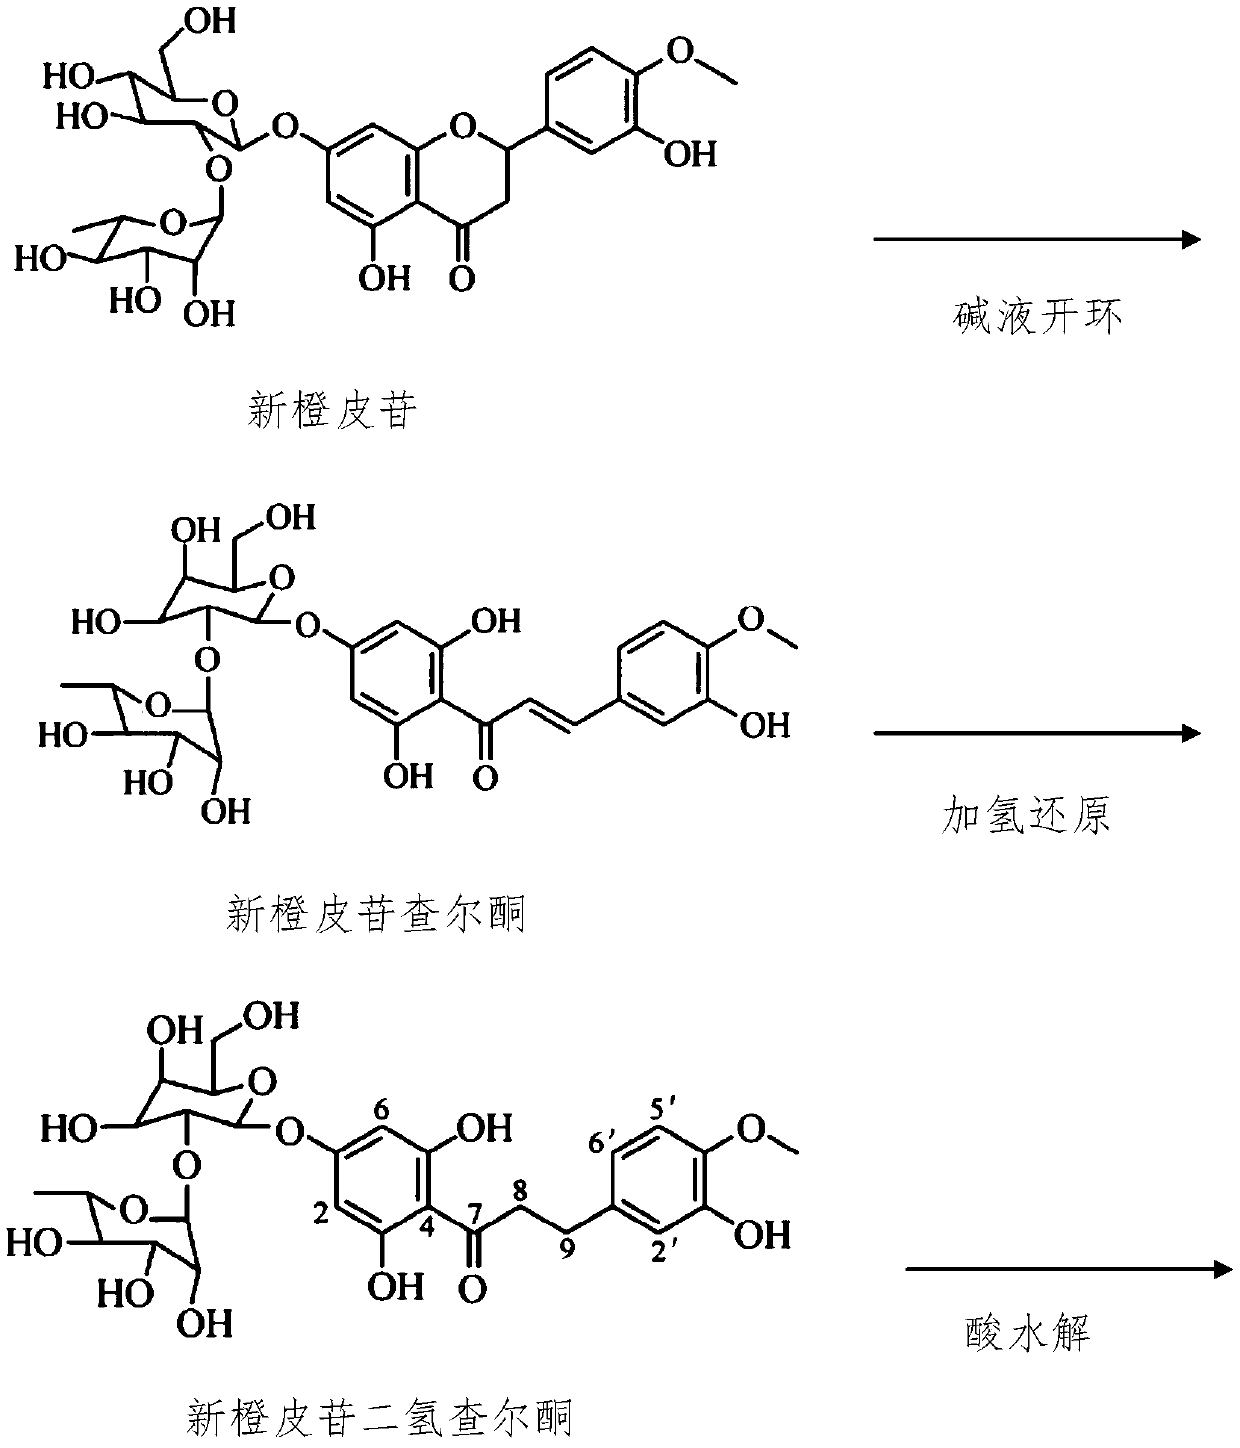 Synthesis method of hesperitin dihydrochalcone